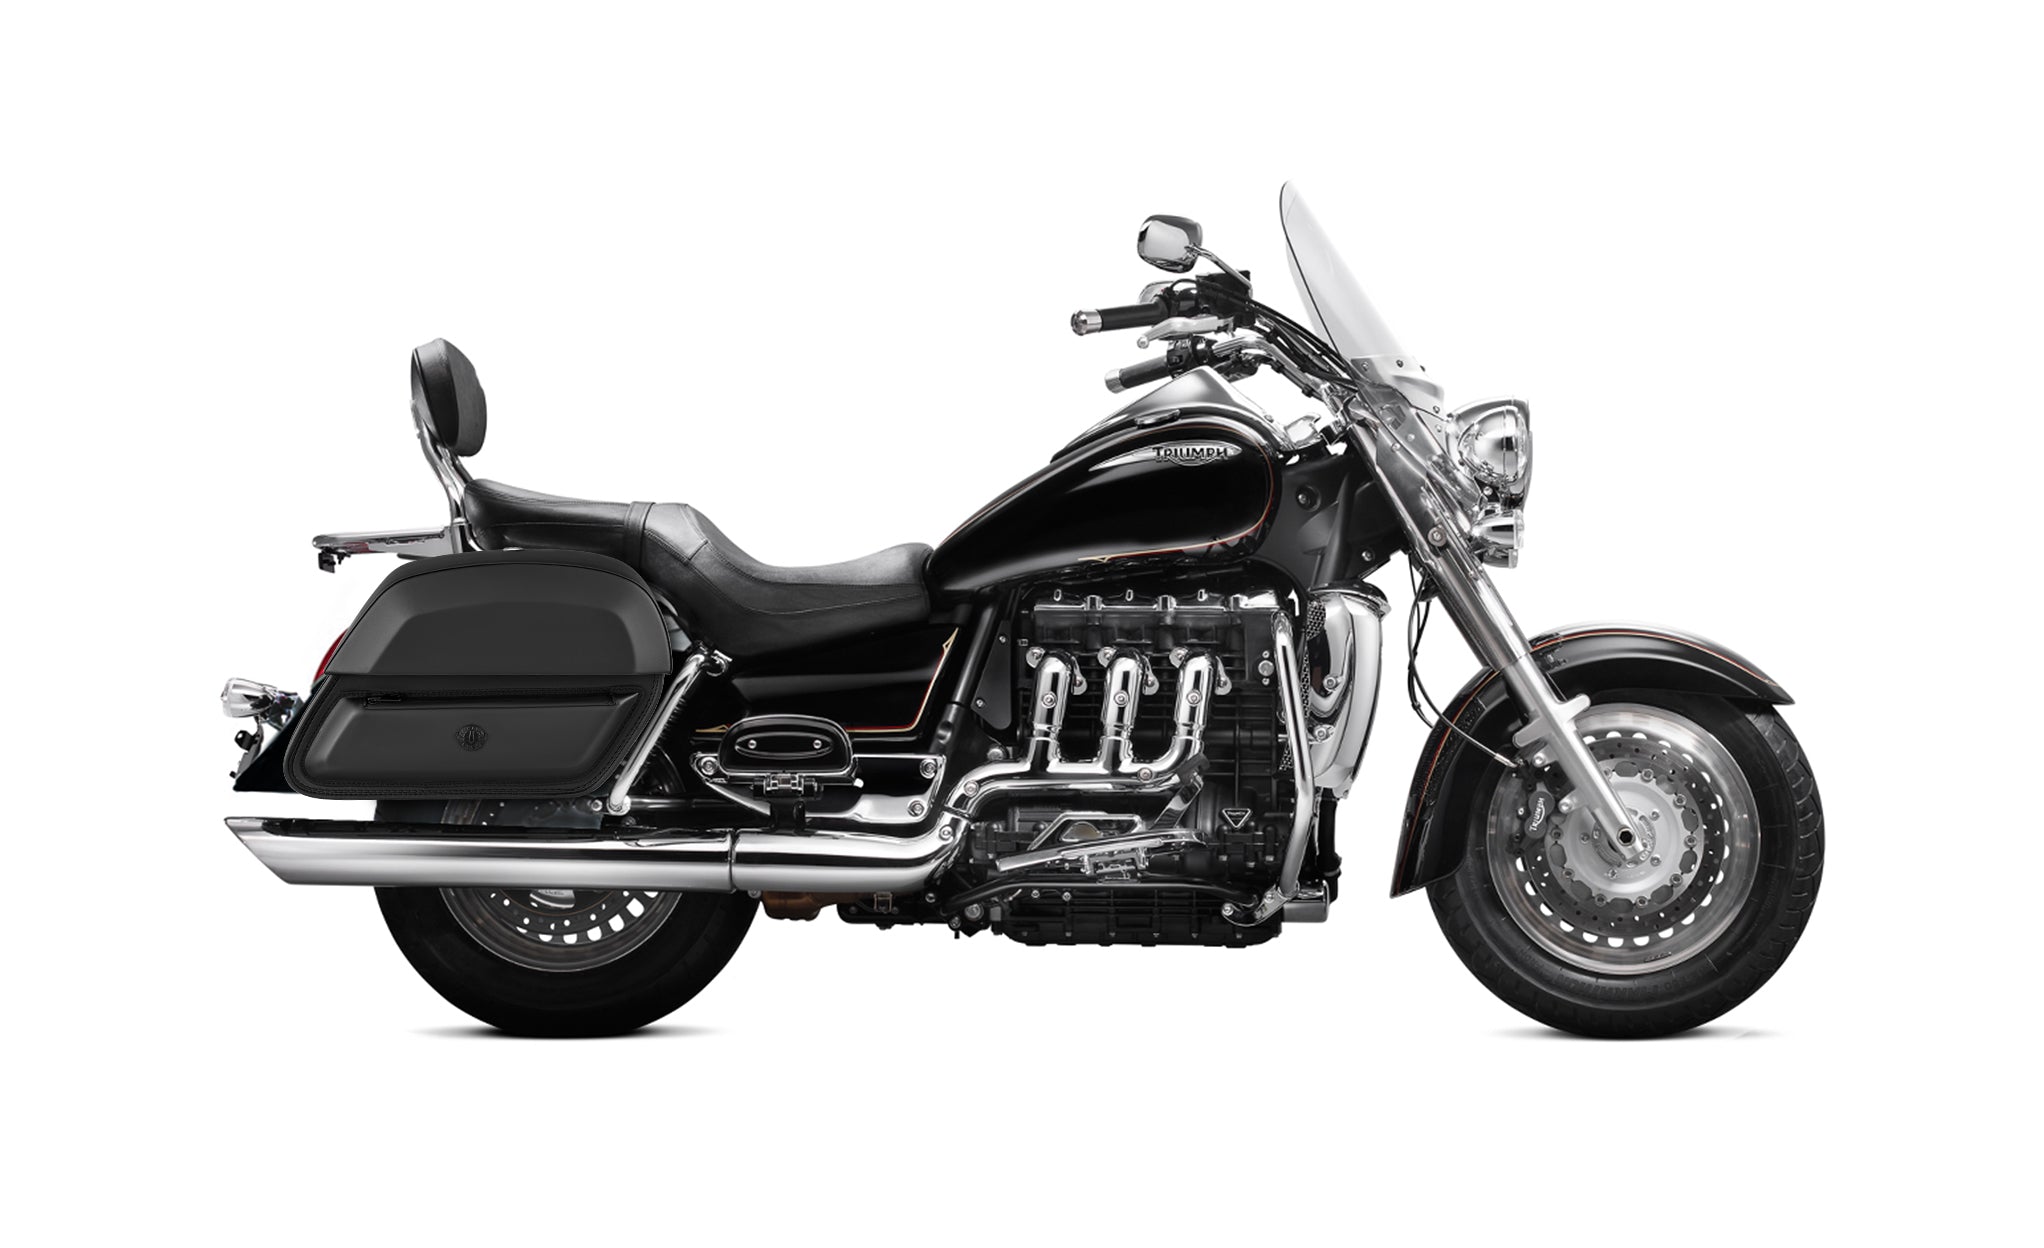 28L - Wraith Medium Triumph Rocket III Touring Leather Motorcycle Saddlebags BAG on Bike View @expand